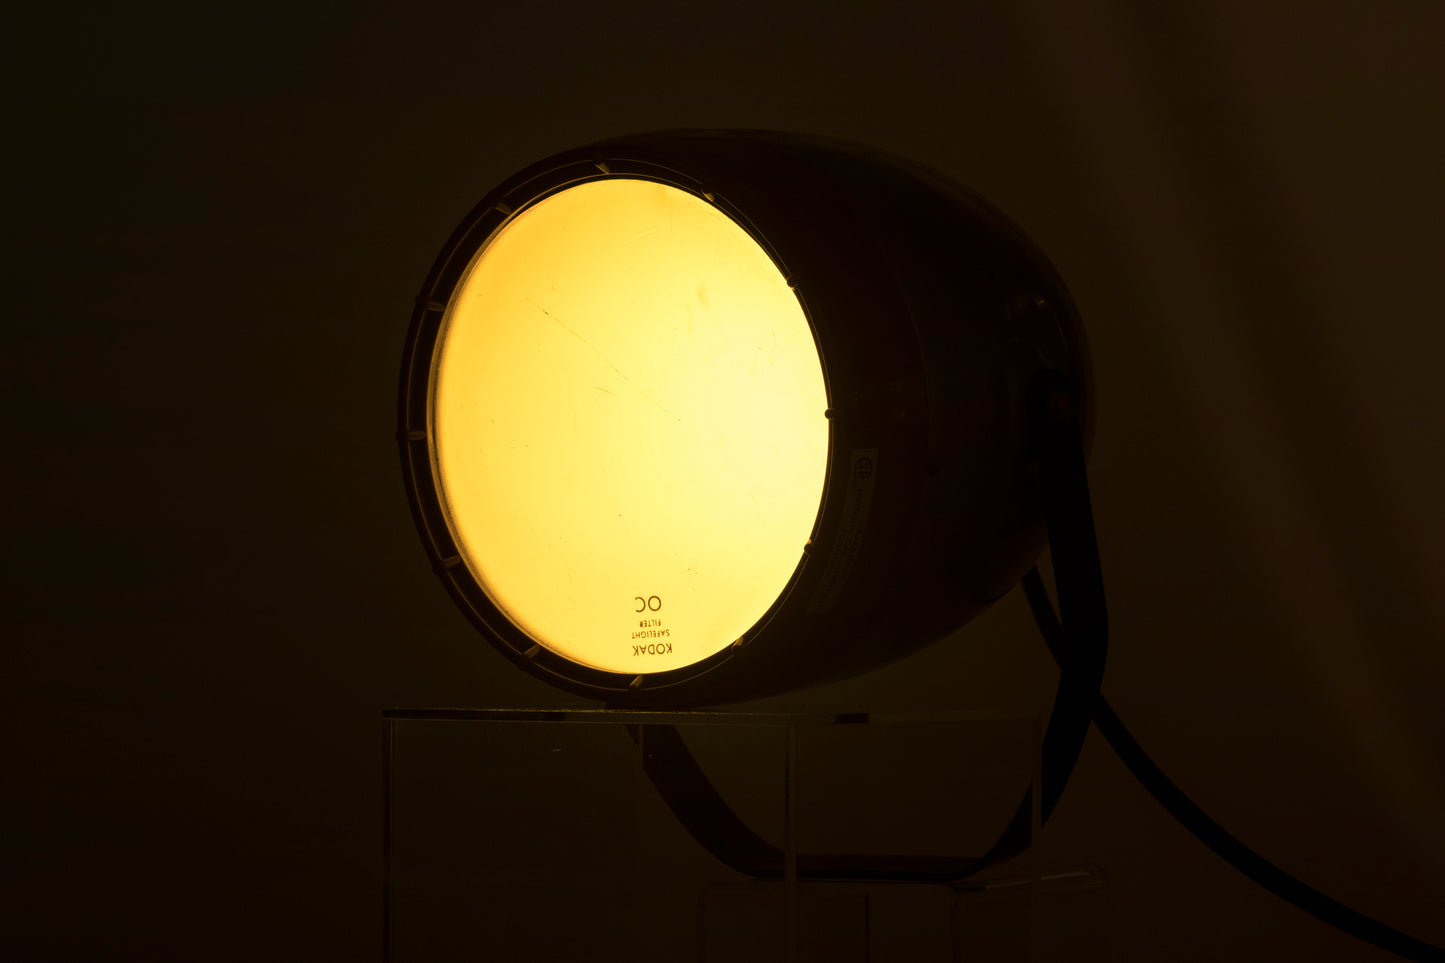 Kodak Model B Safelight with OC filter